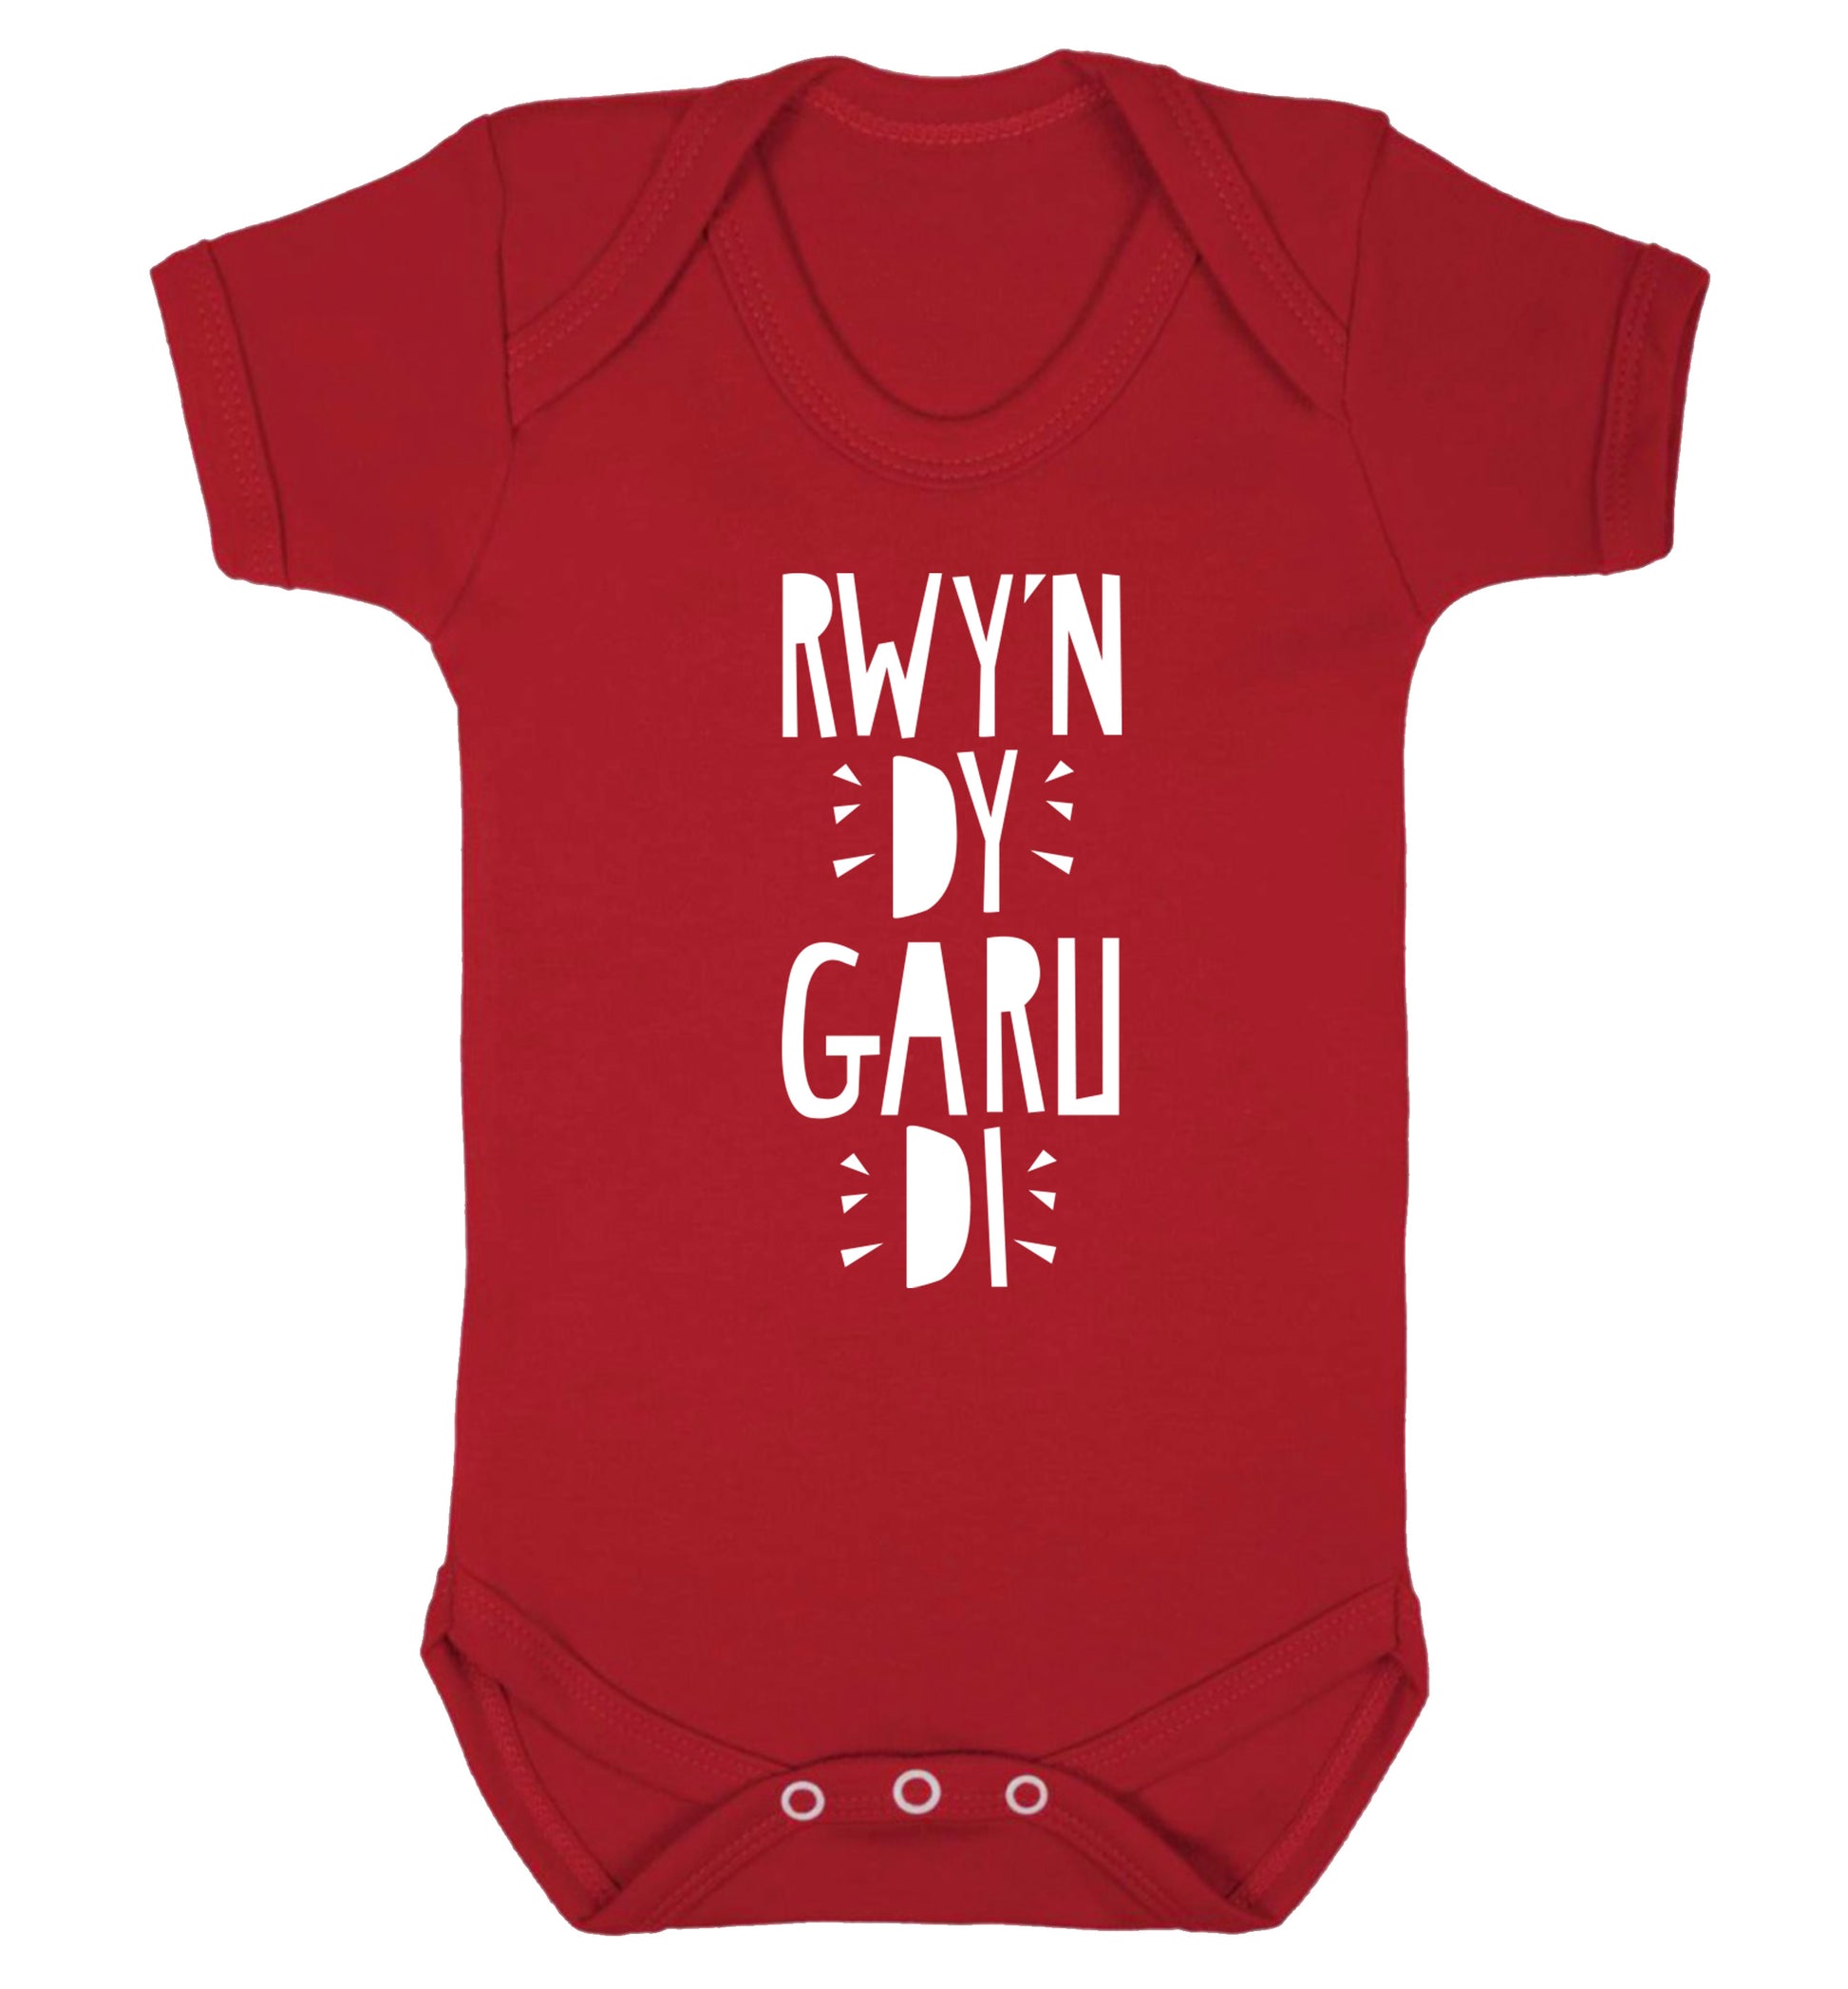 Rwy'n dy garu di - I love you Baby Vest red 18-24 months